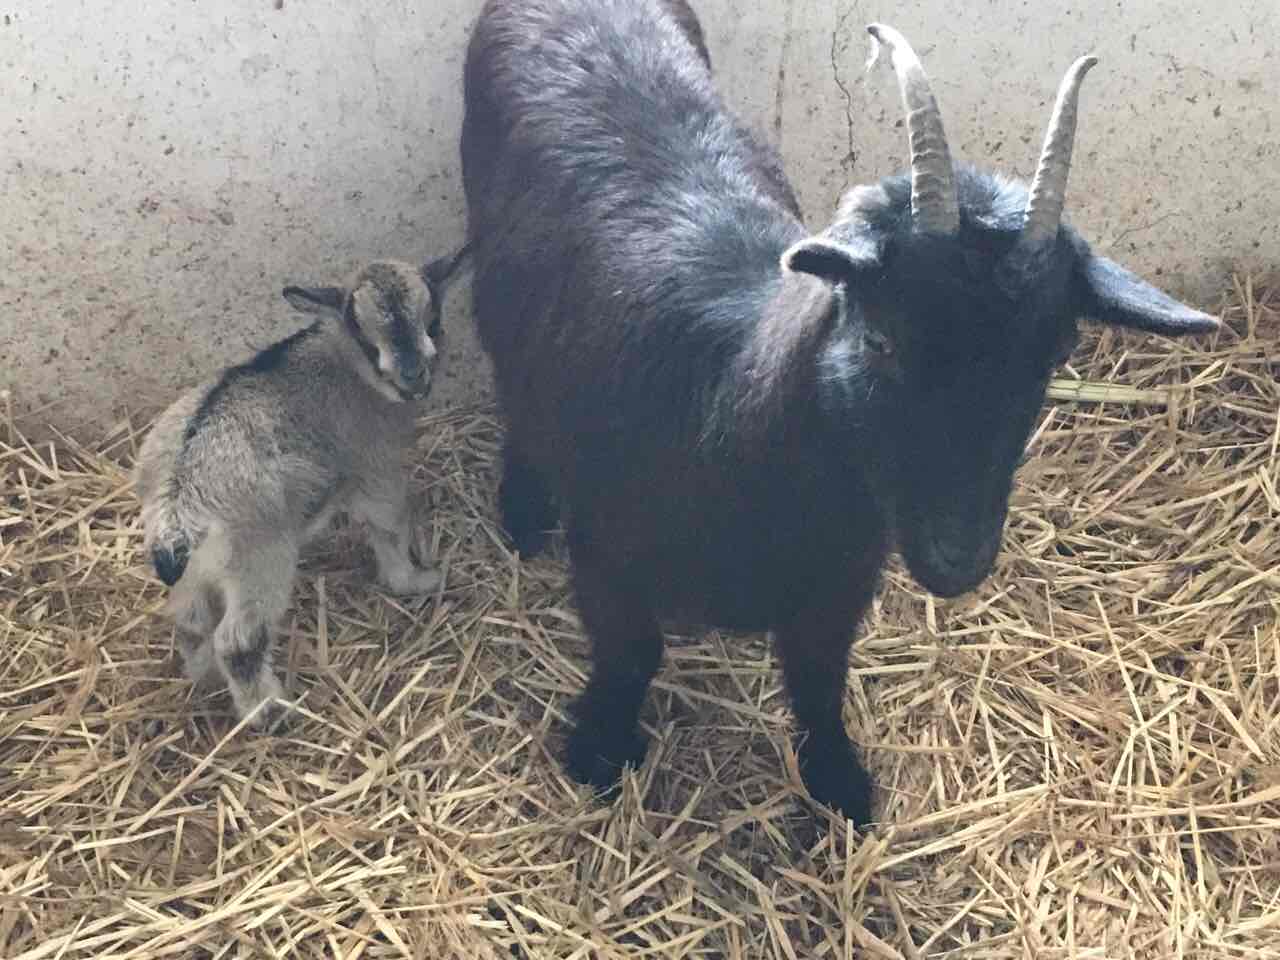 Cameroon dwarf goats